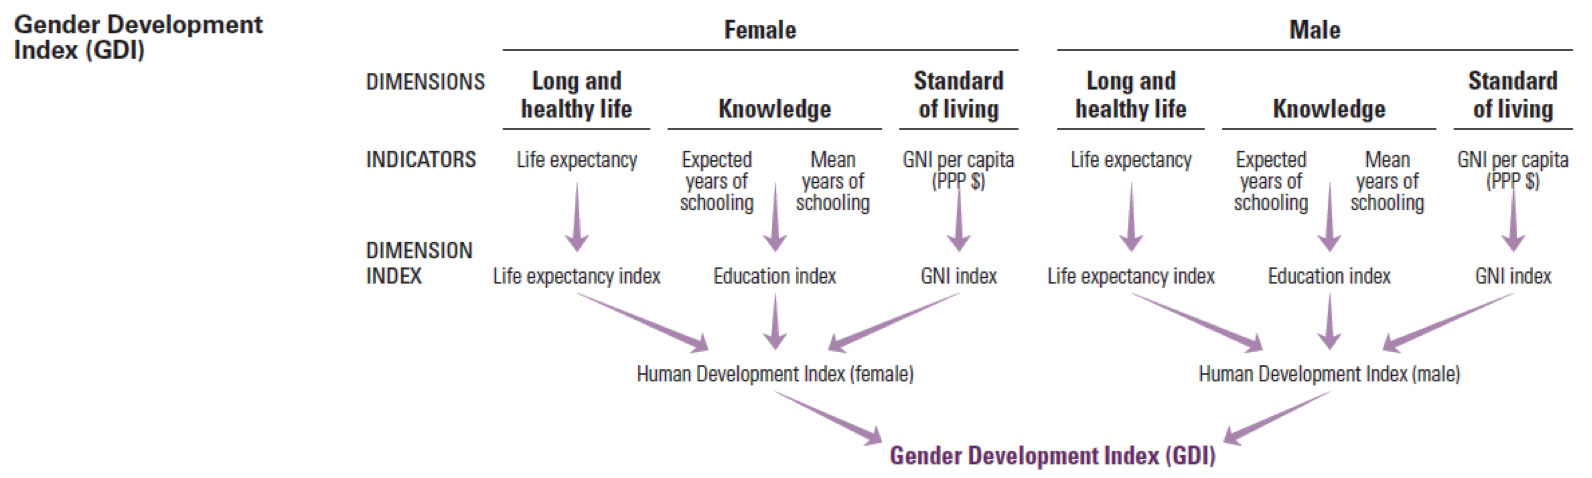 Gender Development Index (GDI) | Human Development Reports